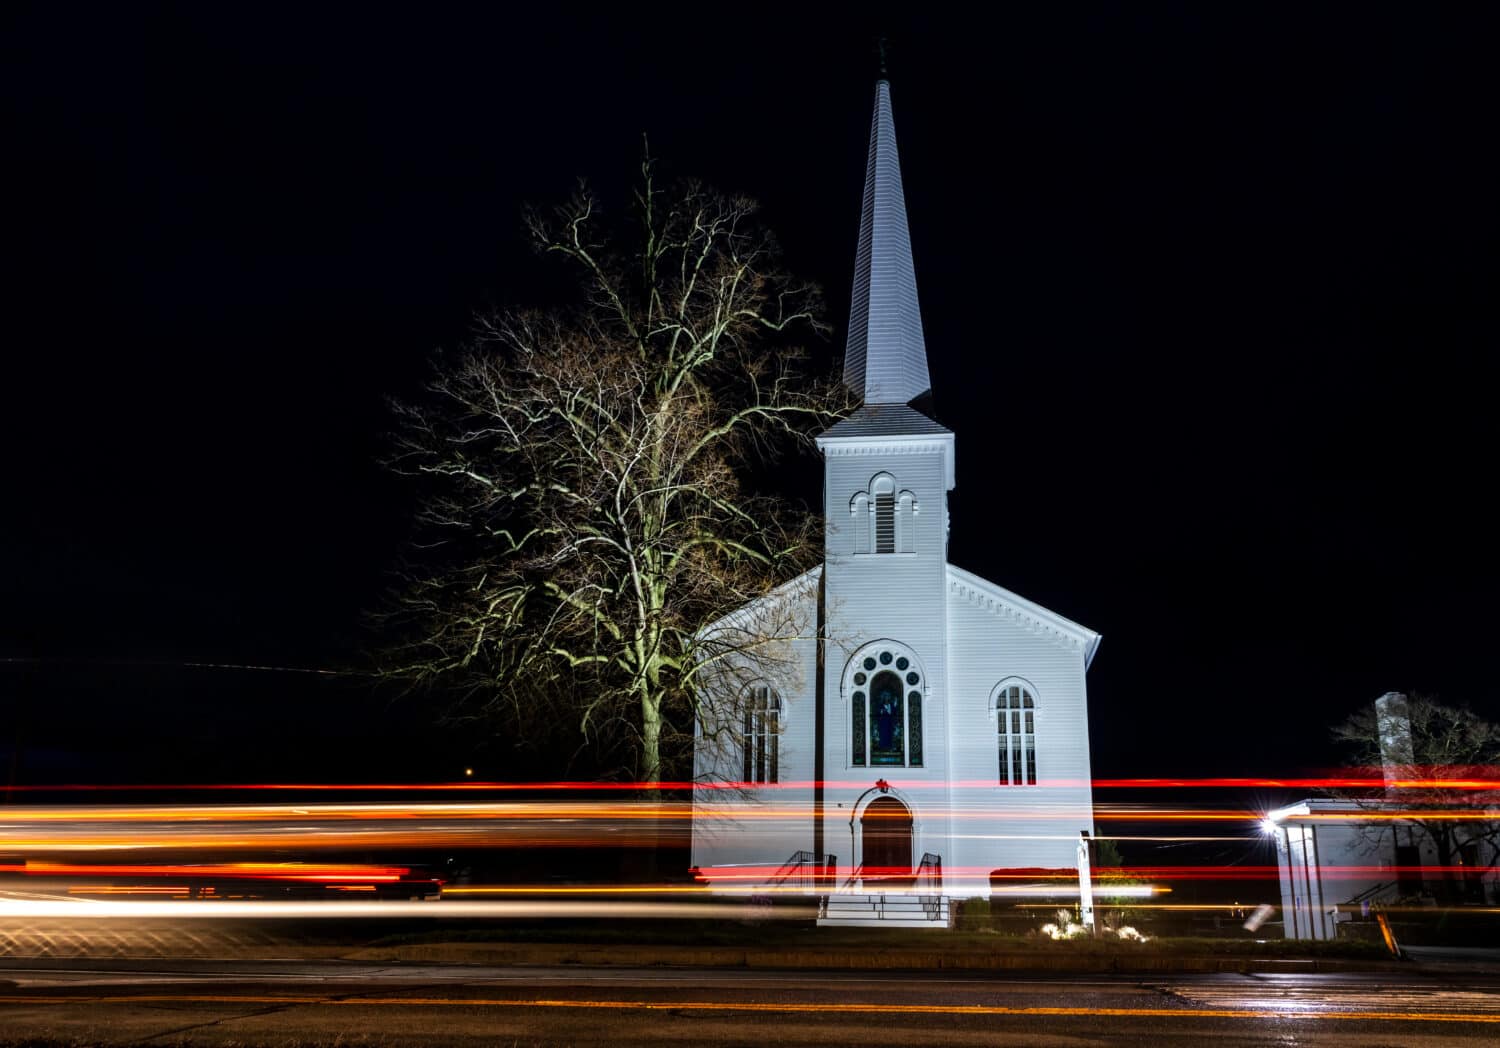 Night view of Barrington Congregational church in Barrington, Rhode Island.